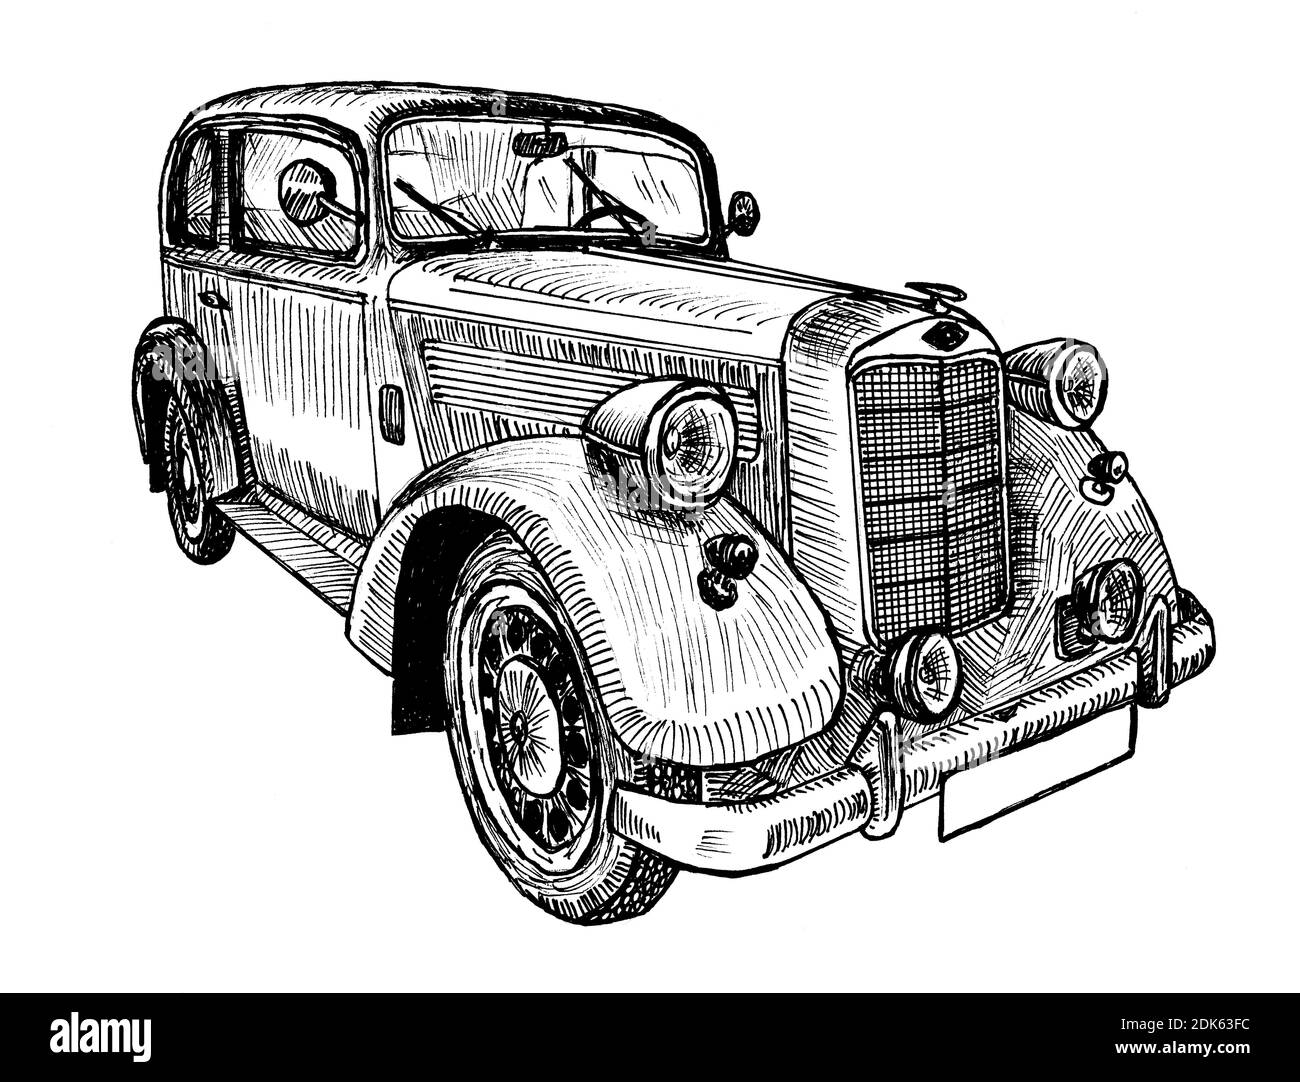 Hand drawn vintage retro car, doodle sketch graphics monochrome illustration on white background (originals, no tracing) Stock Photo